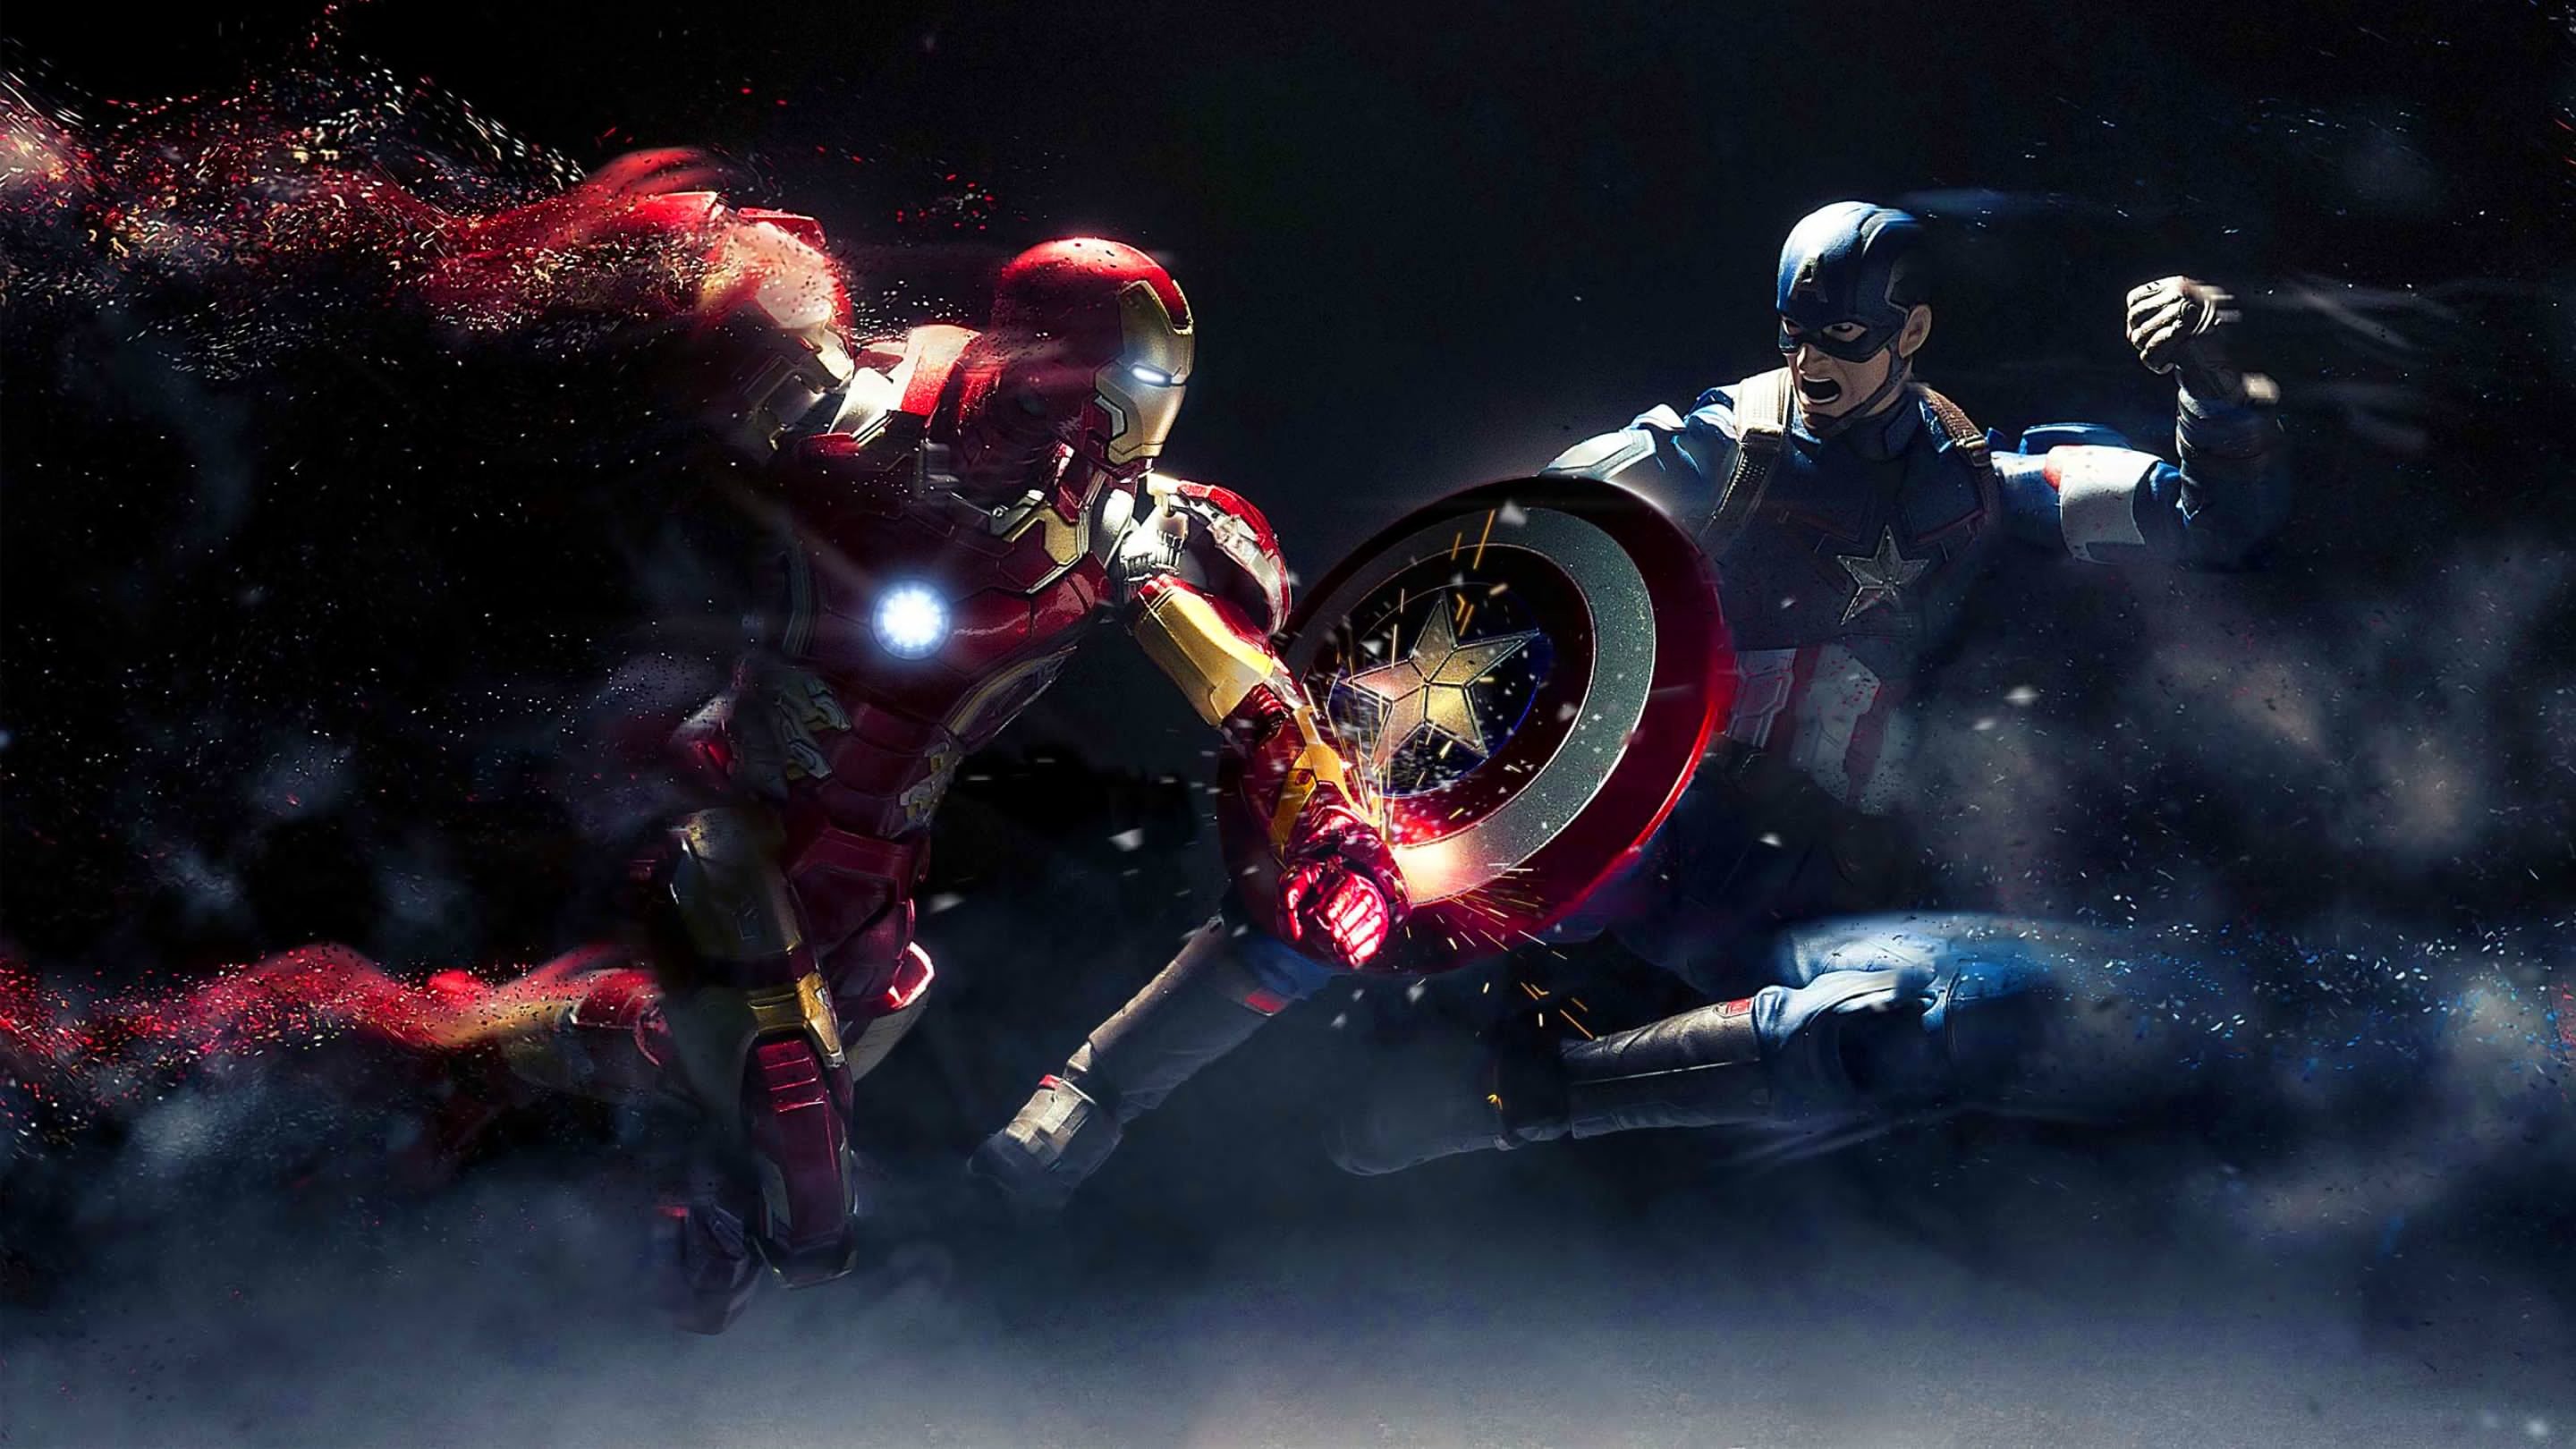 Captain America Vs Iron Man Wallpaper 4k - 2880x1620 Wallpaper 